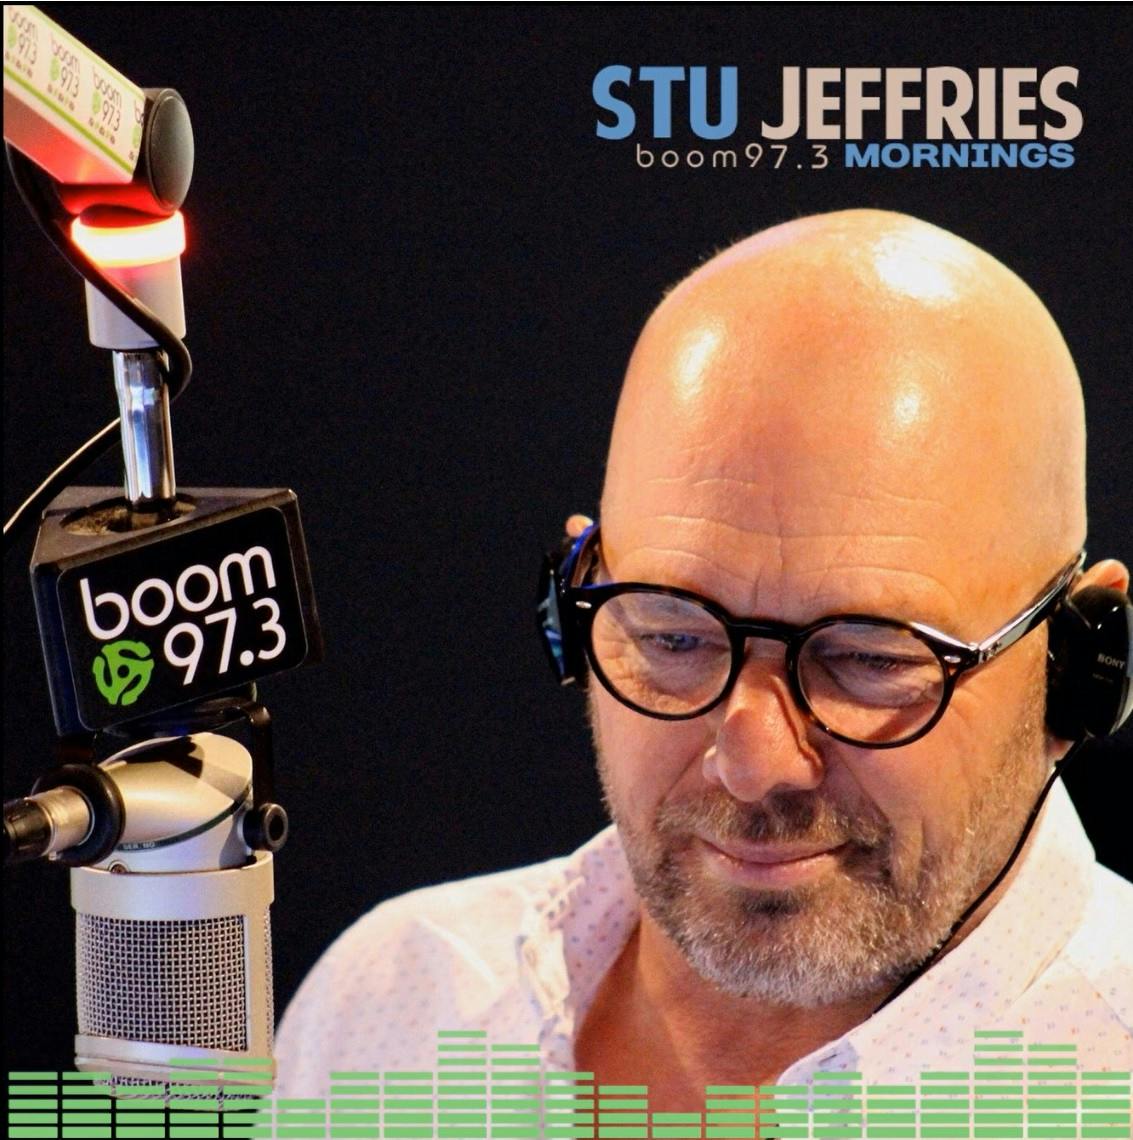 Wavve Design of the Week goes to Stu Jeffries at Boom 97.3 Mornings